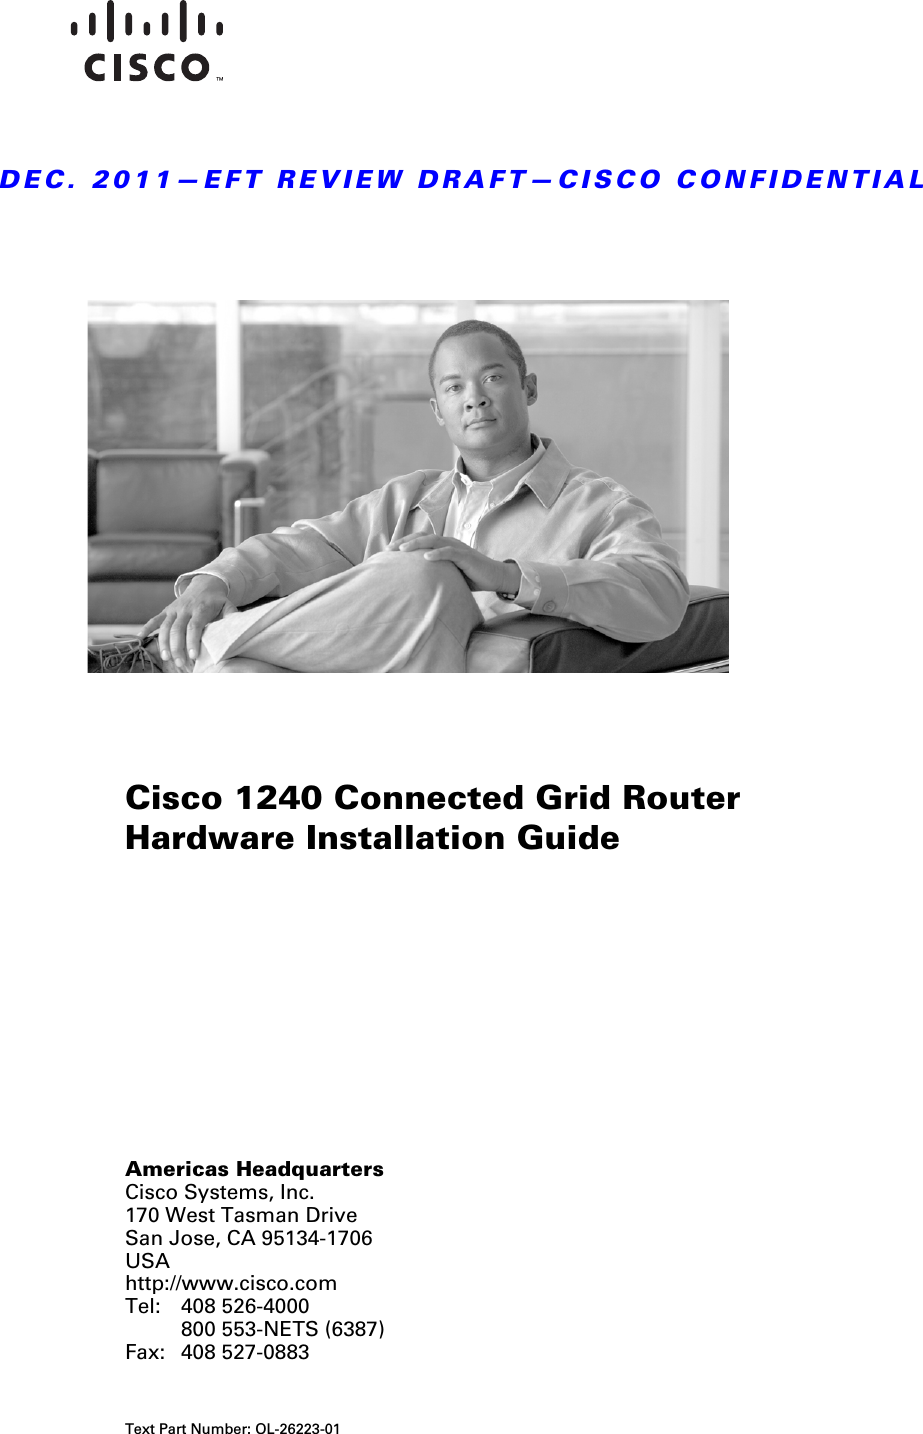 DEC. 2011—EFT REVIEW DRAFT—CISCO CONFIDENTIALAmericas HeadquartersCisco Systems, Inc.170 West Tasman DriveSan Jose, CA 95134-1706 USAhttp://www.cisco.comTel: 408 526-4000800 553-NETS (6387)Fax: 408 527-0883Cisco 1240 Connected Grid Router Hardware Installation GuideText Part Number: OL-26223-01